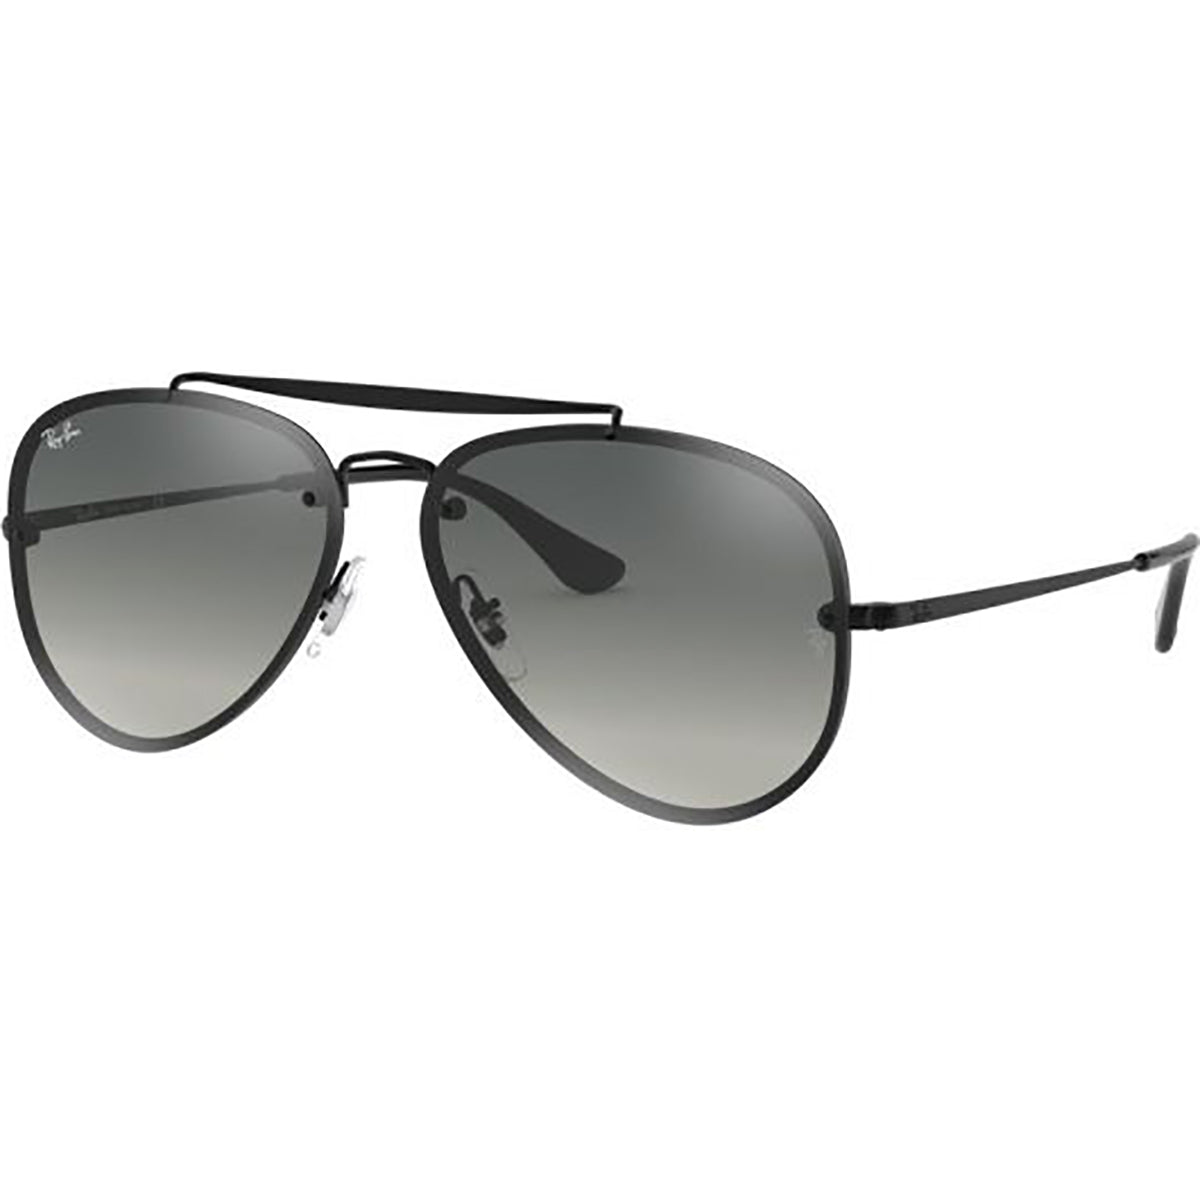 Ray-Ban Blaze Aviator Men's Aviator Sunglasses-0RB3584N